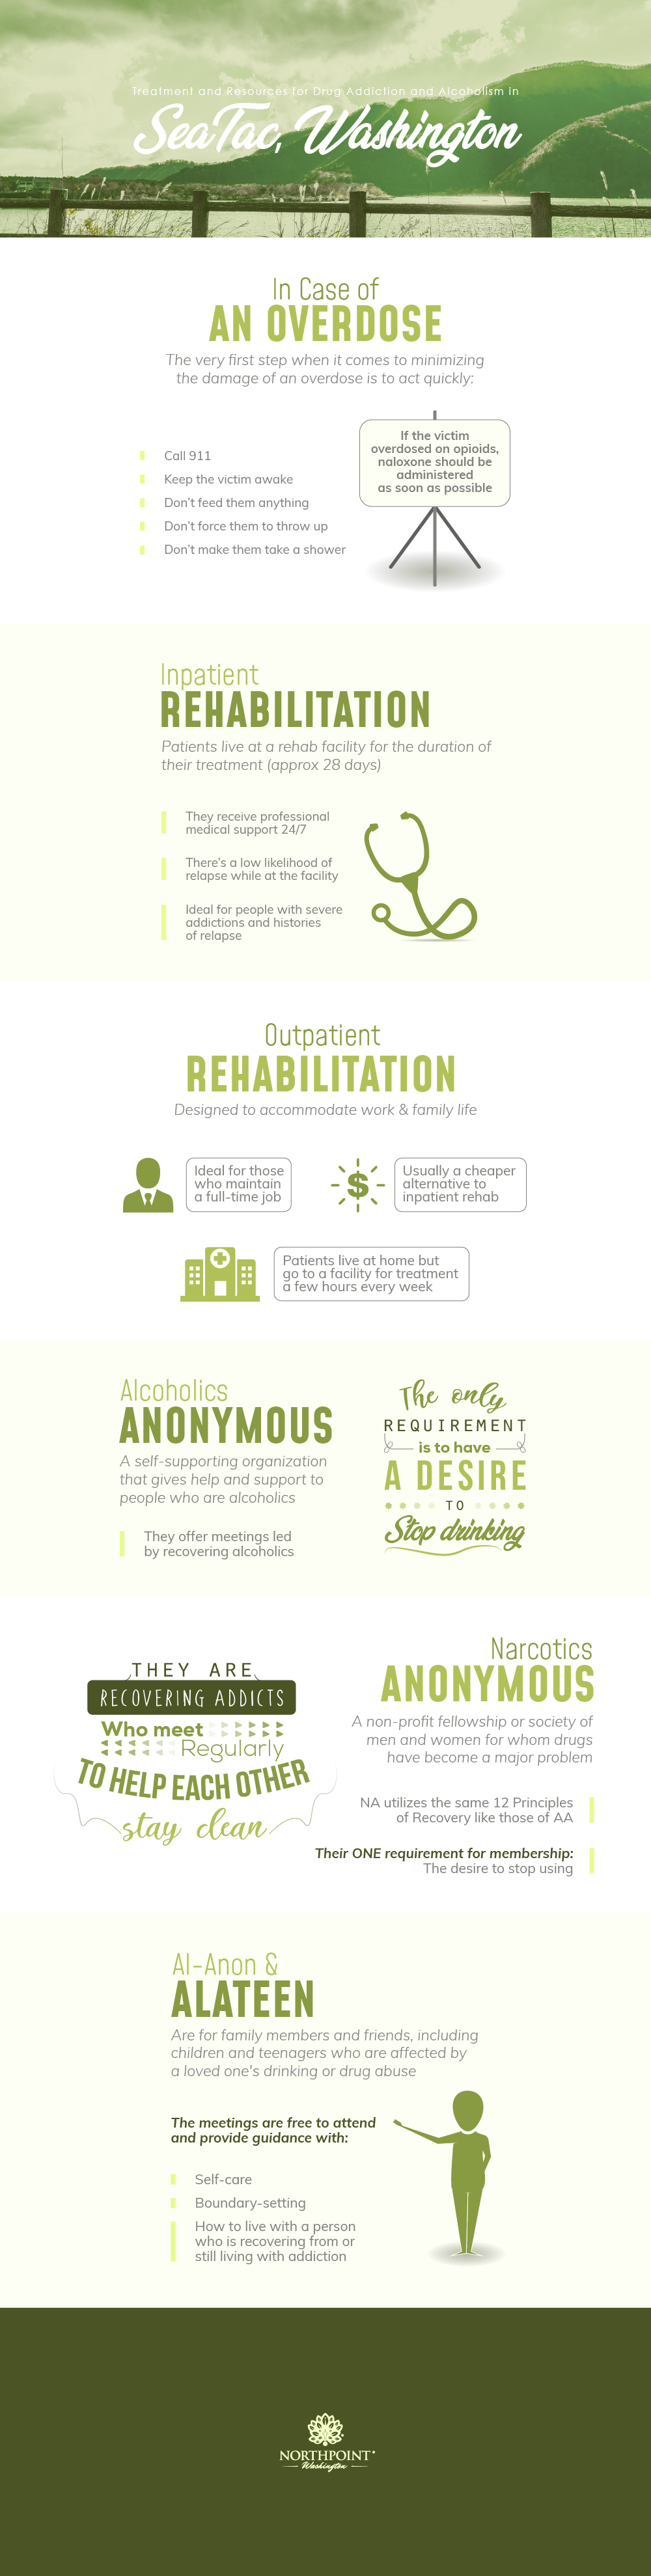 SeaTac, Washington Addiction Resources Full Infographic